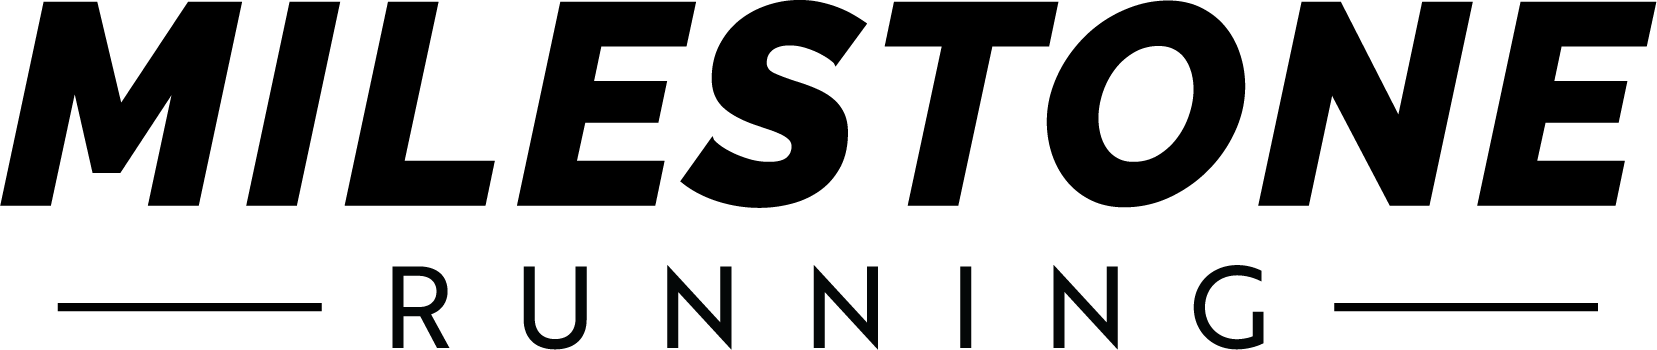 Milestone Running Logo